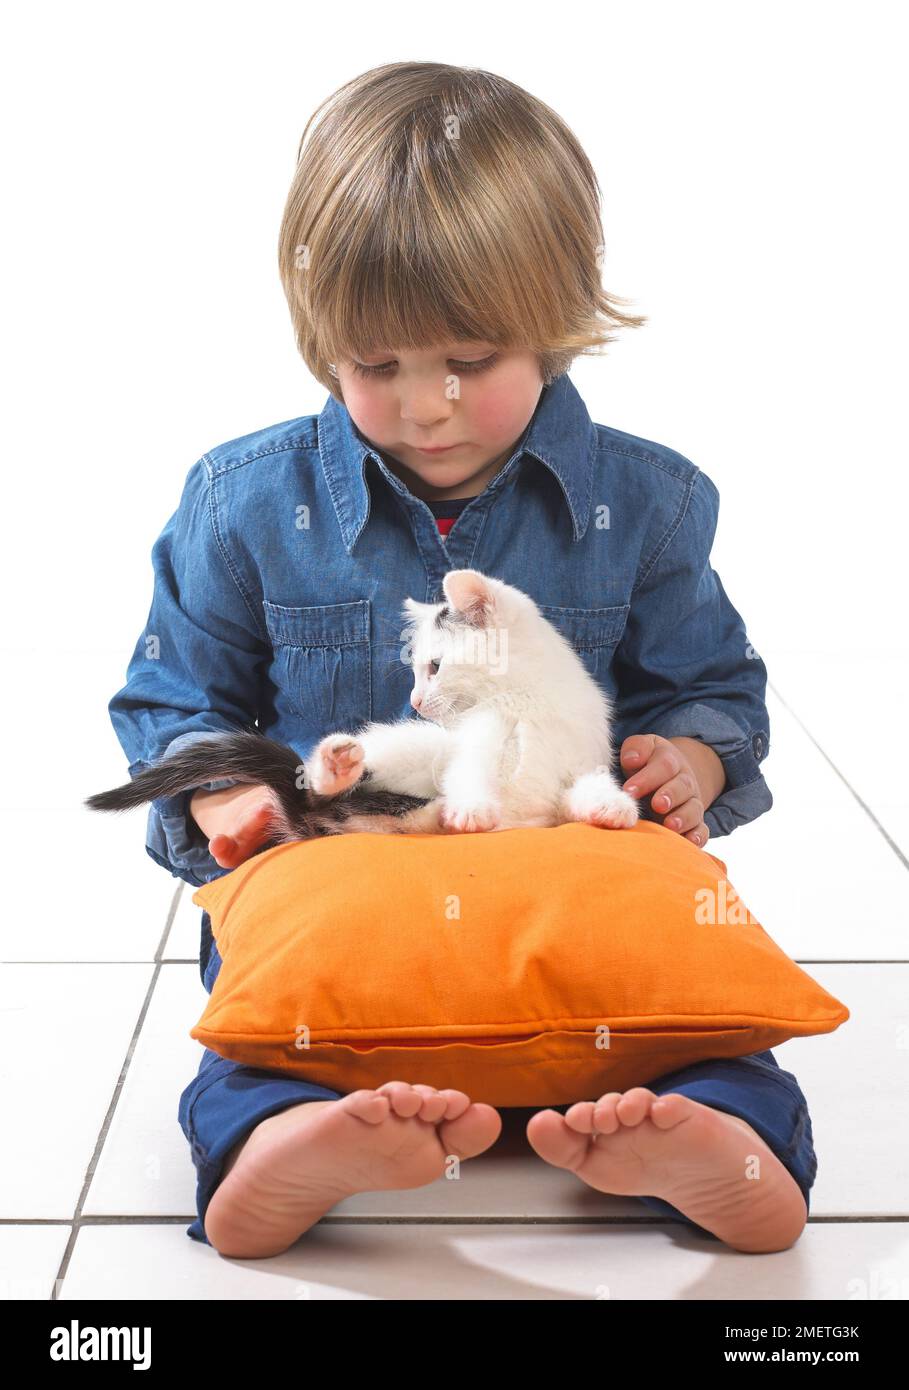 https://c8.alamy.com/comp/2METG3K/boy-sitting-with-kitten-on-cushion-on-lap-3-years-2METG3K.jpg